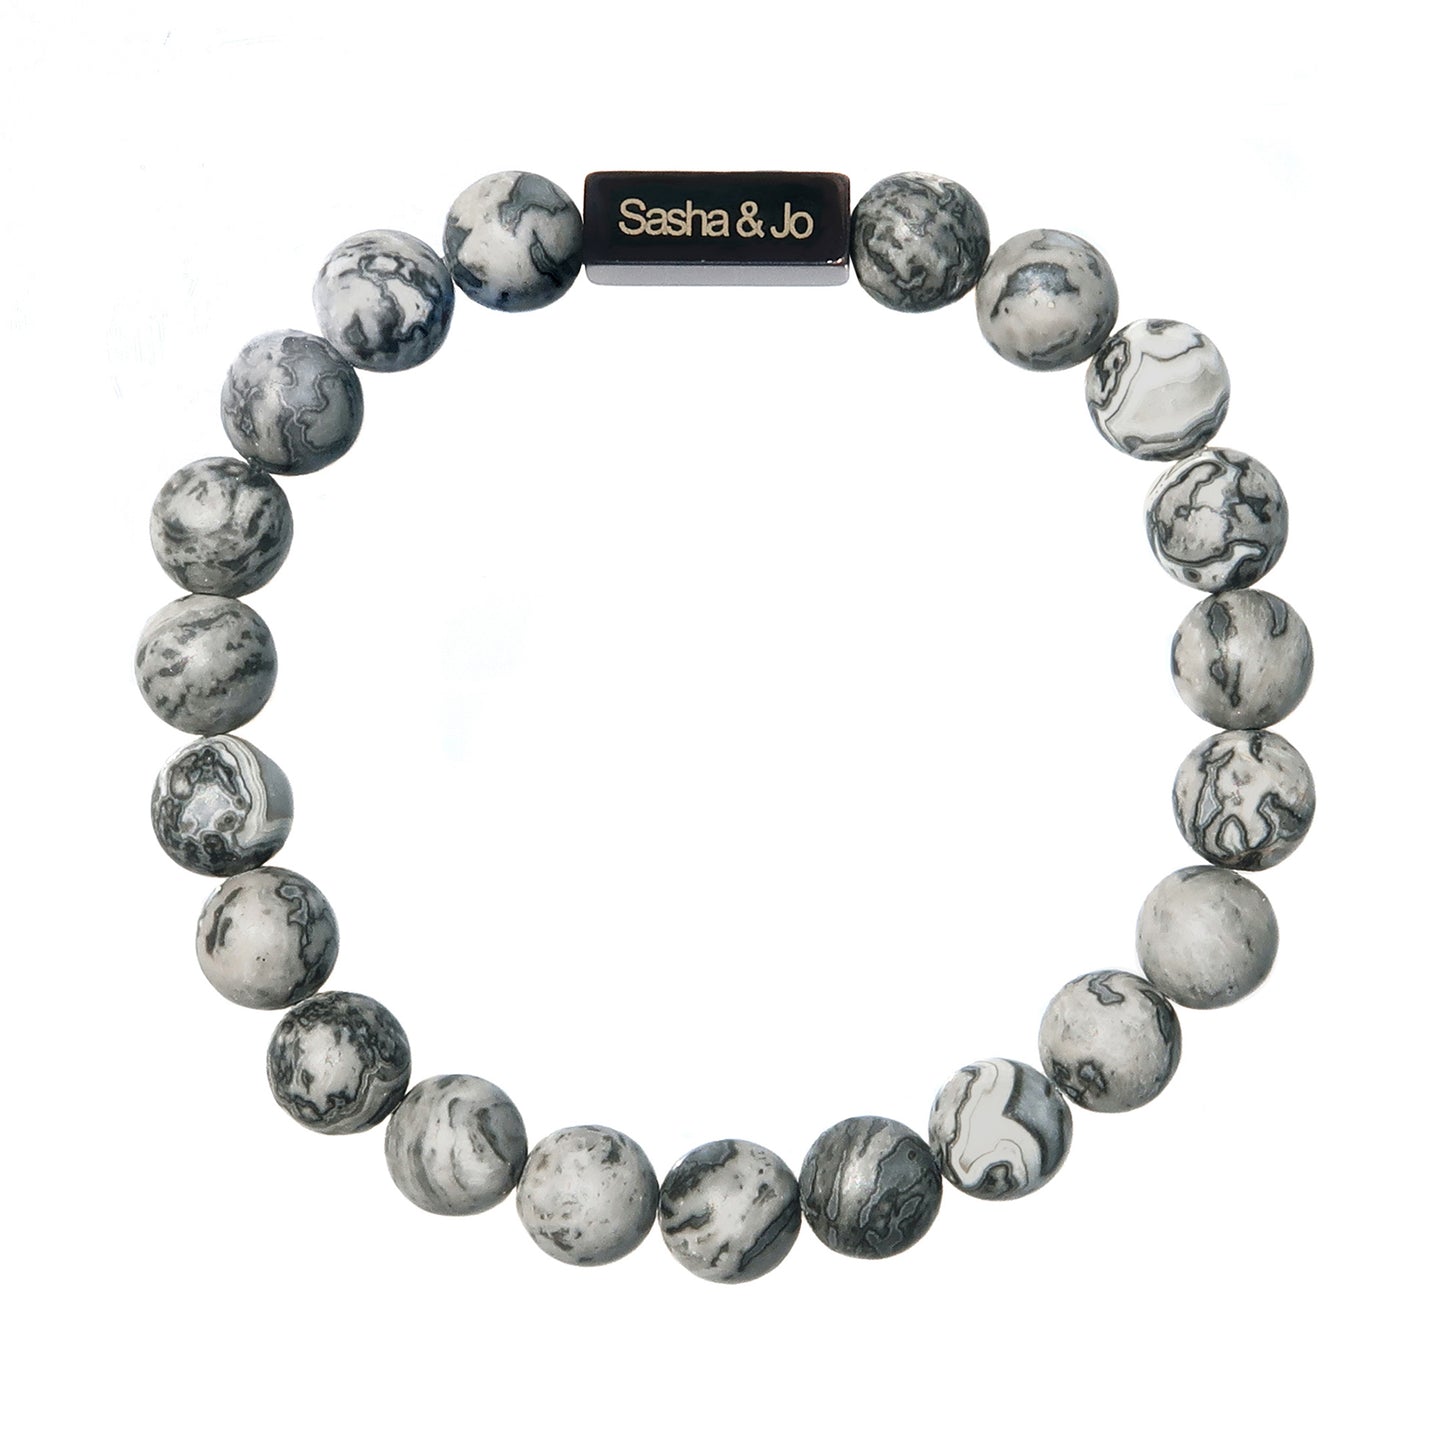 Sasha & Jo jasper grey Picasso beads bracelet